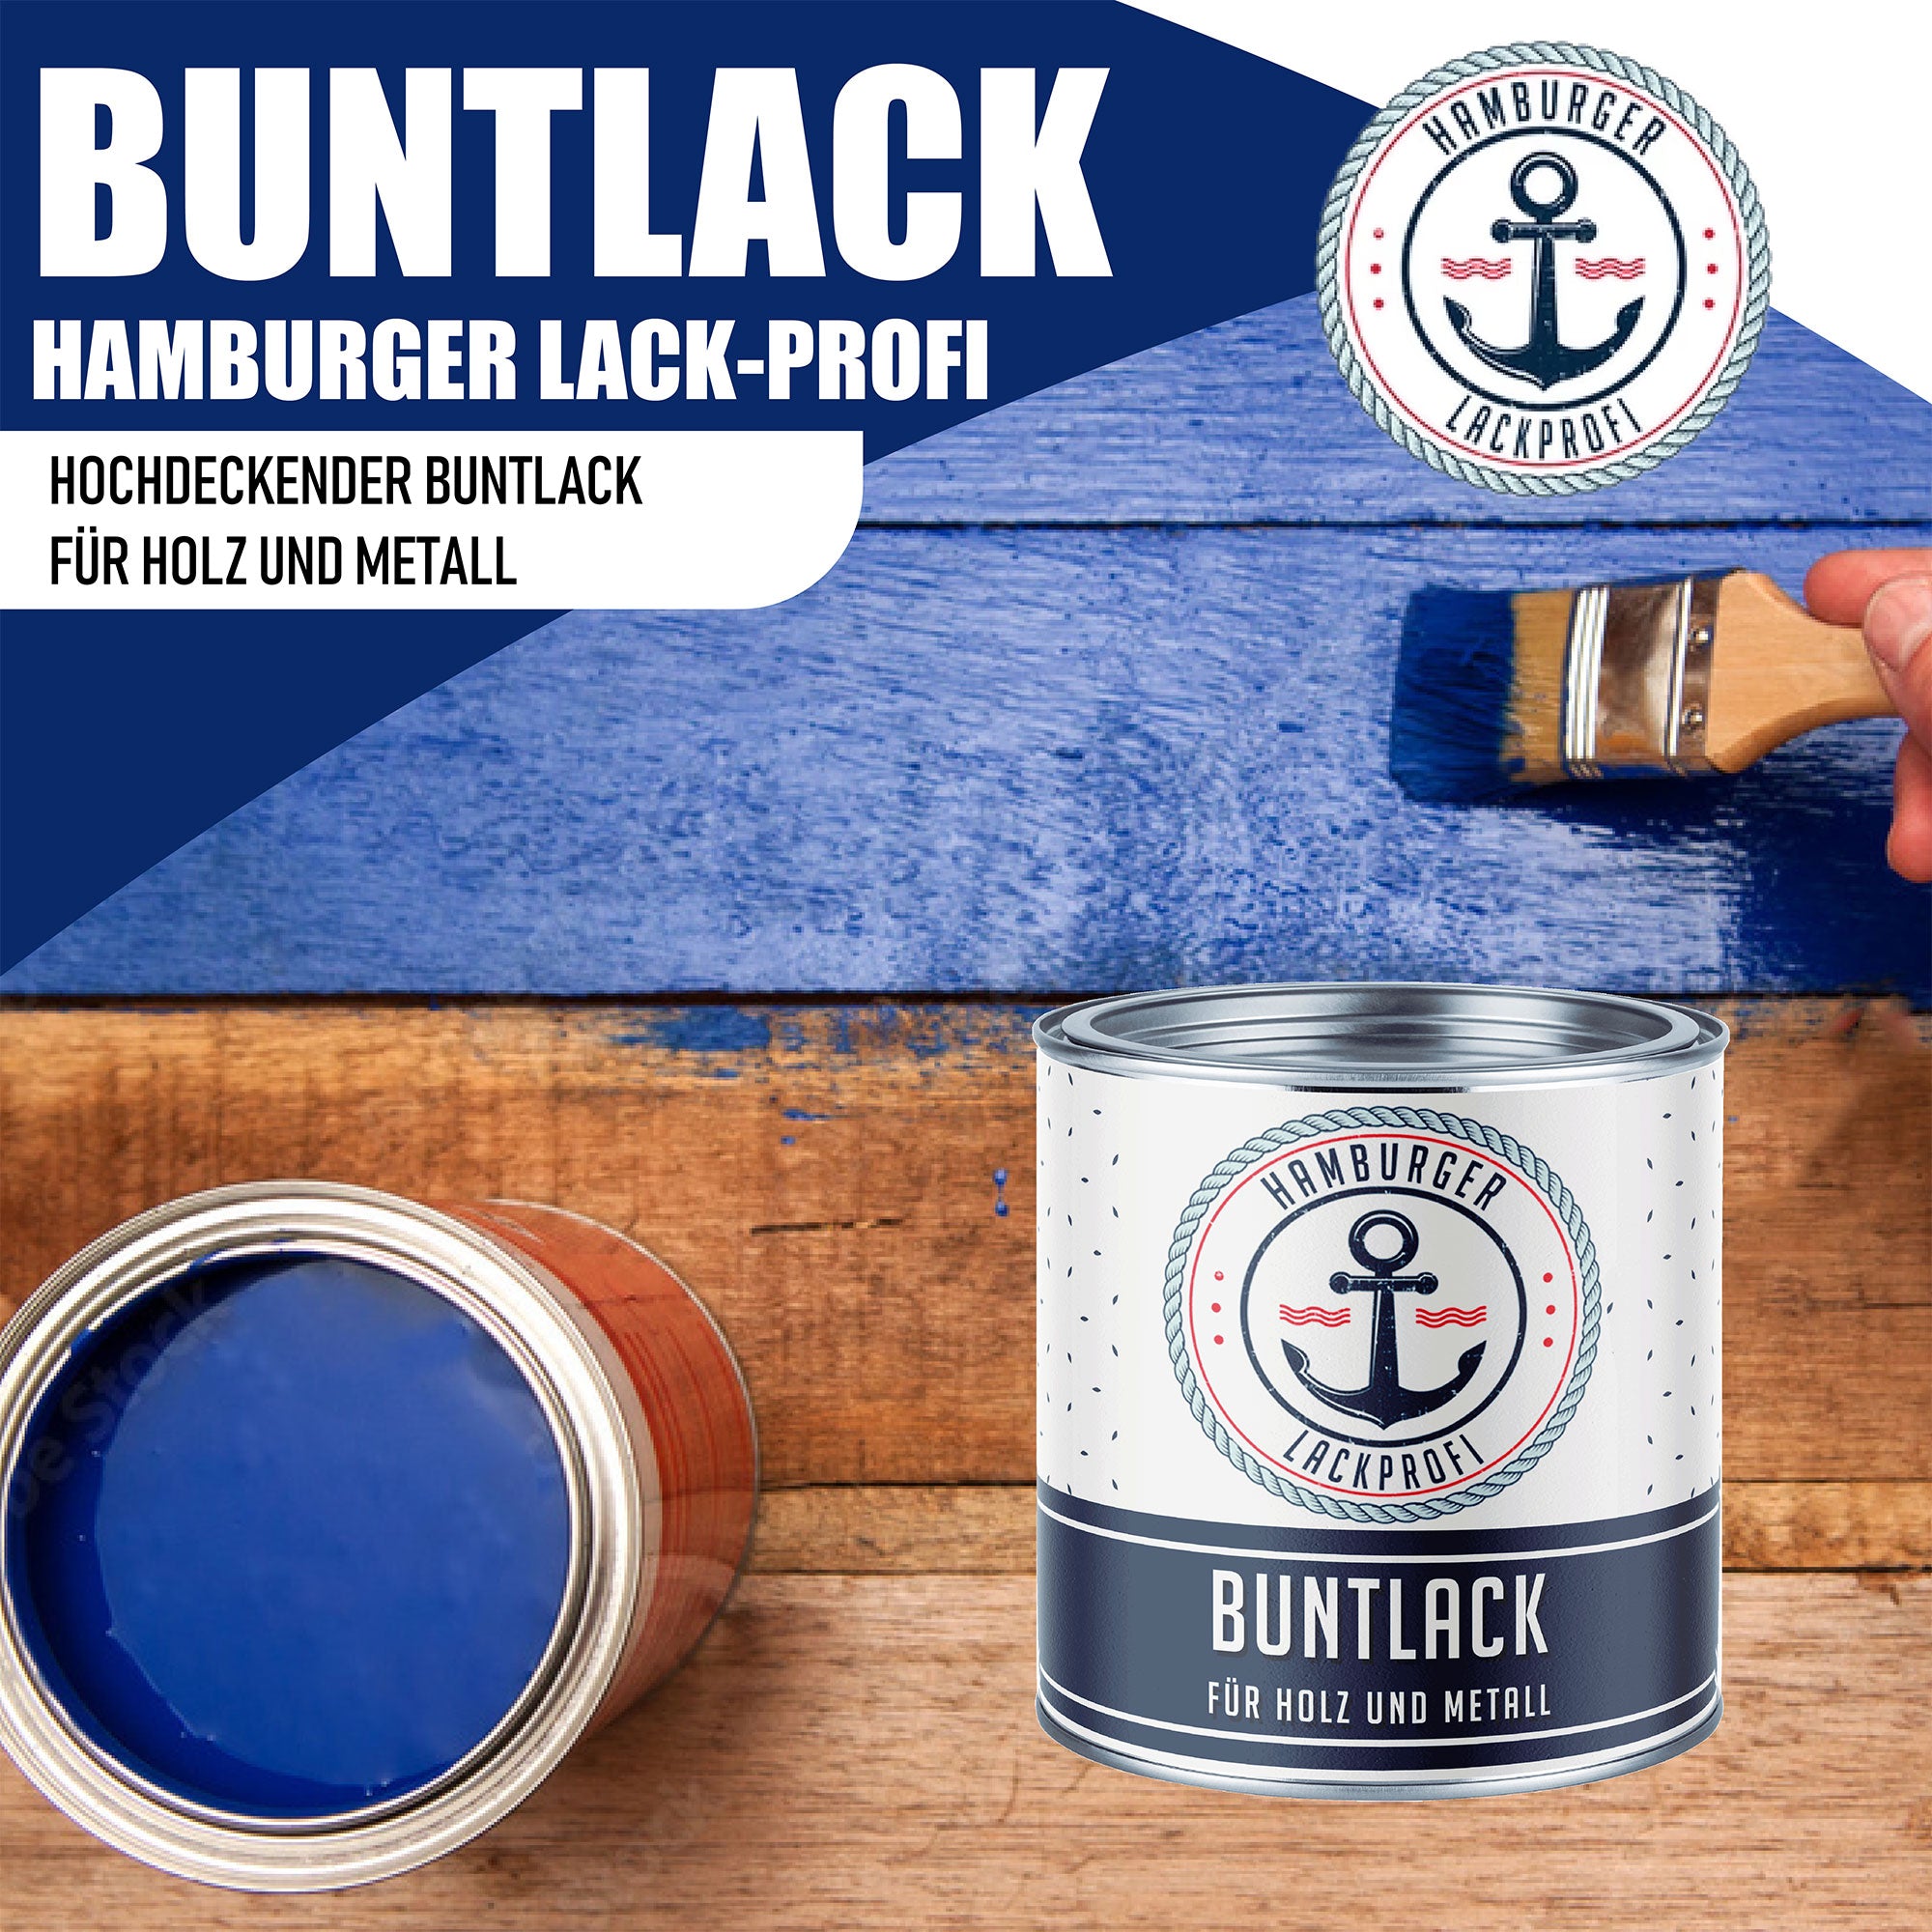 Hamburger Lack-Profi Buntlack Melonengelb RAL 1028 - Robuster Kunstharzlack